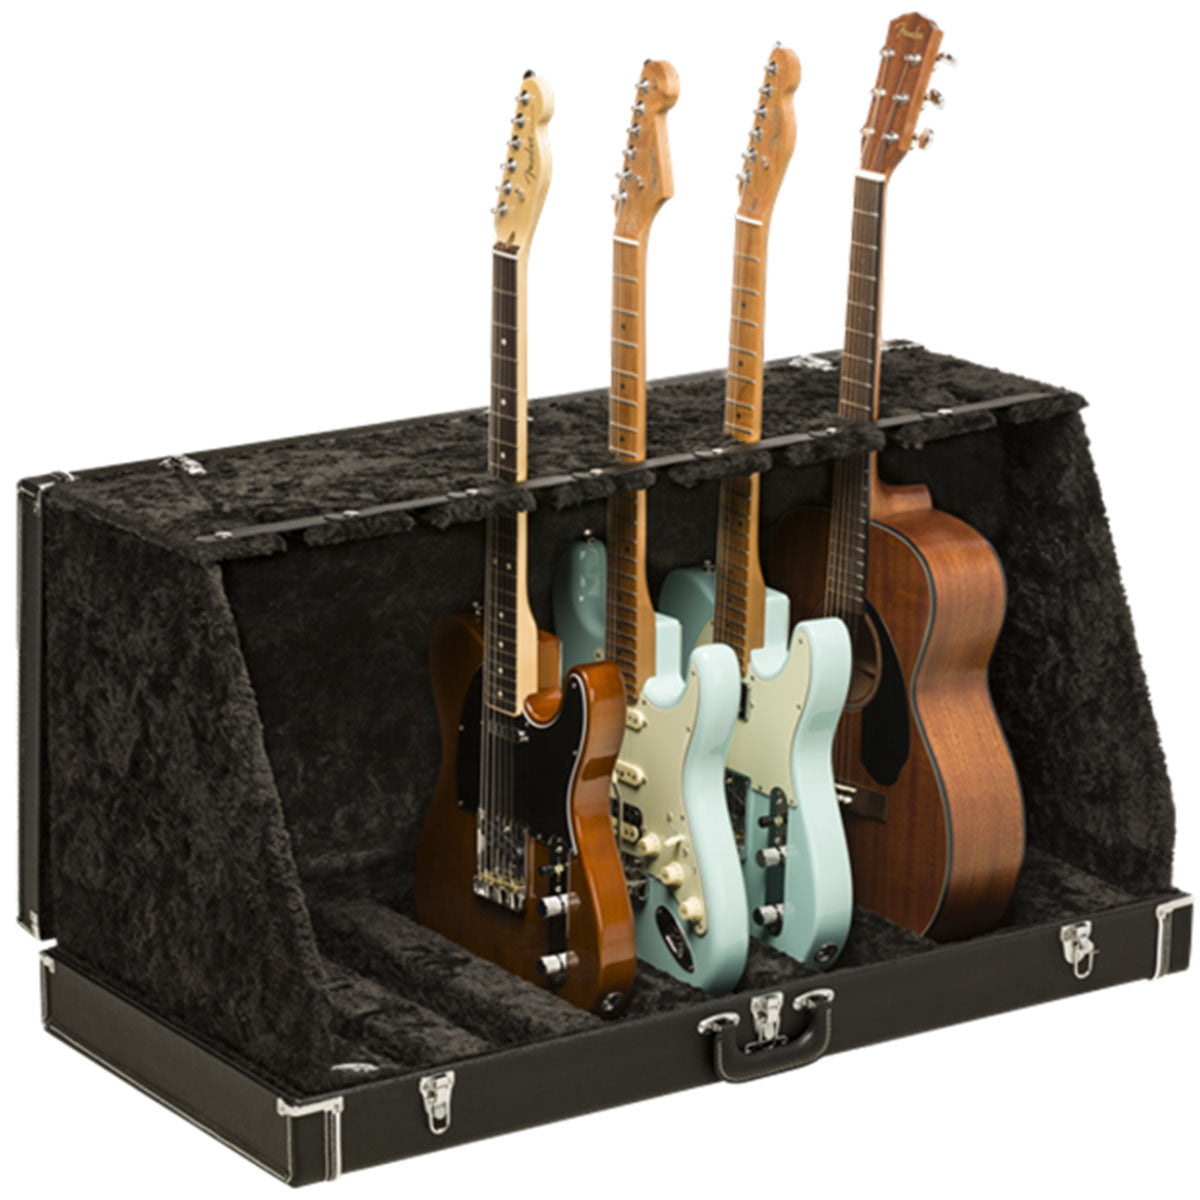 Fender Classic Series Case Stand Black 7-Guitar Rack - 0991017506